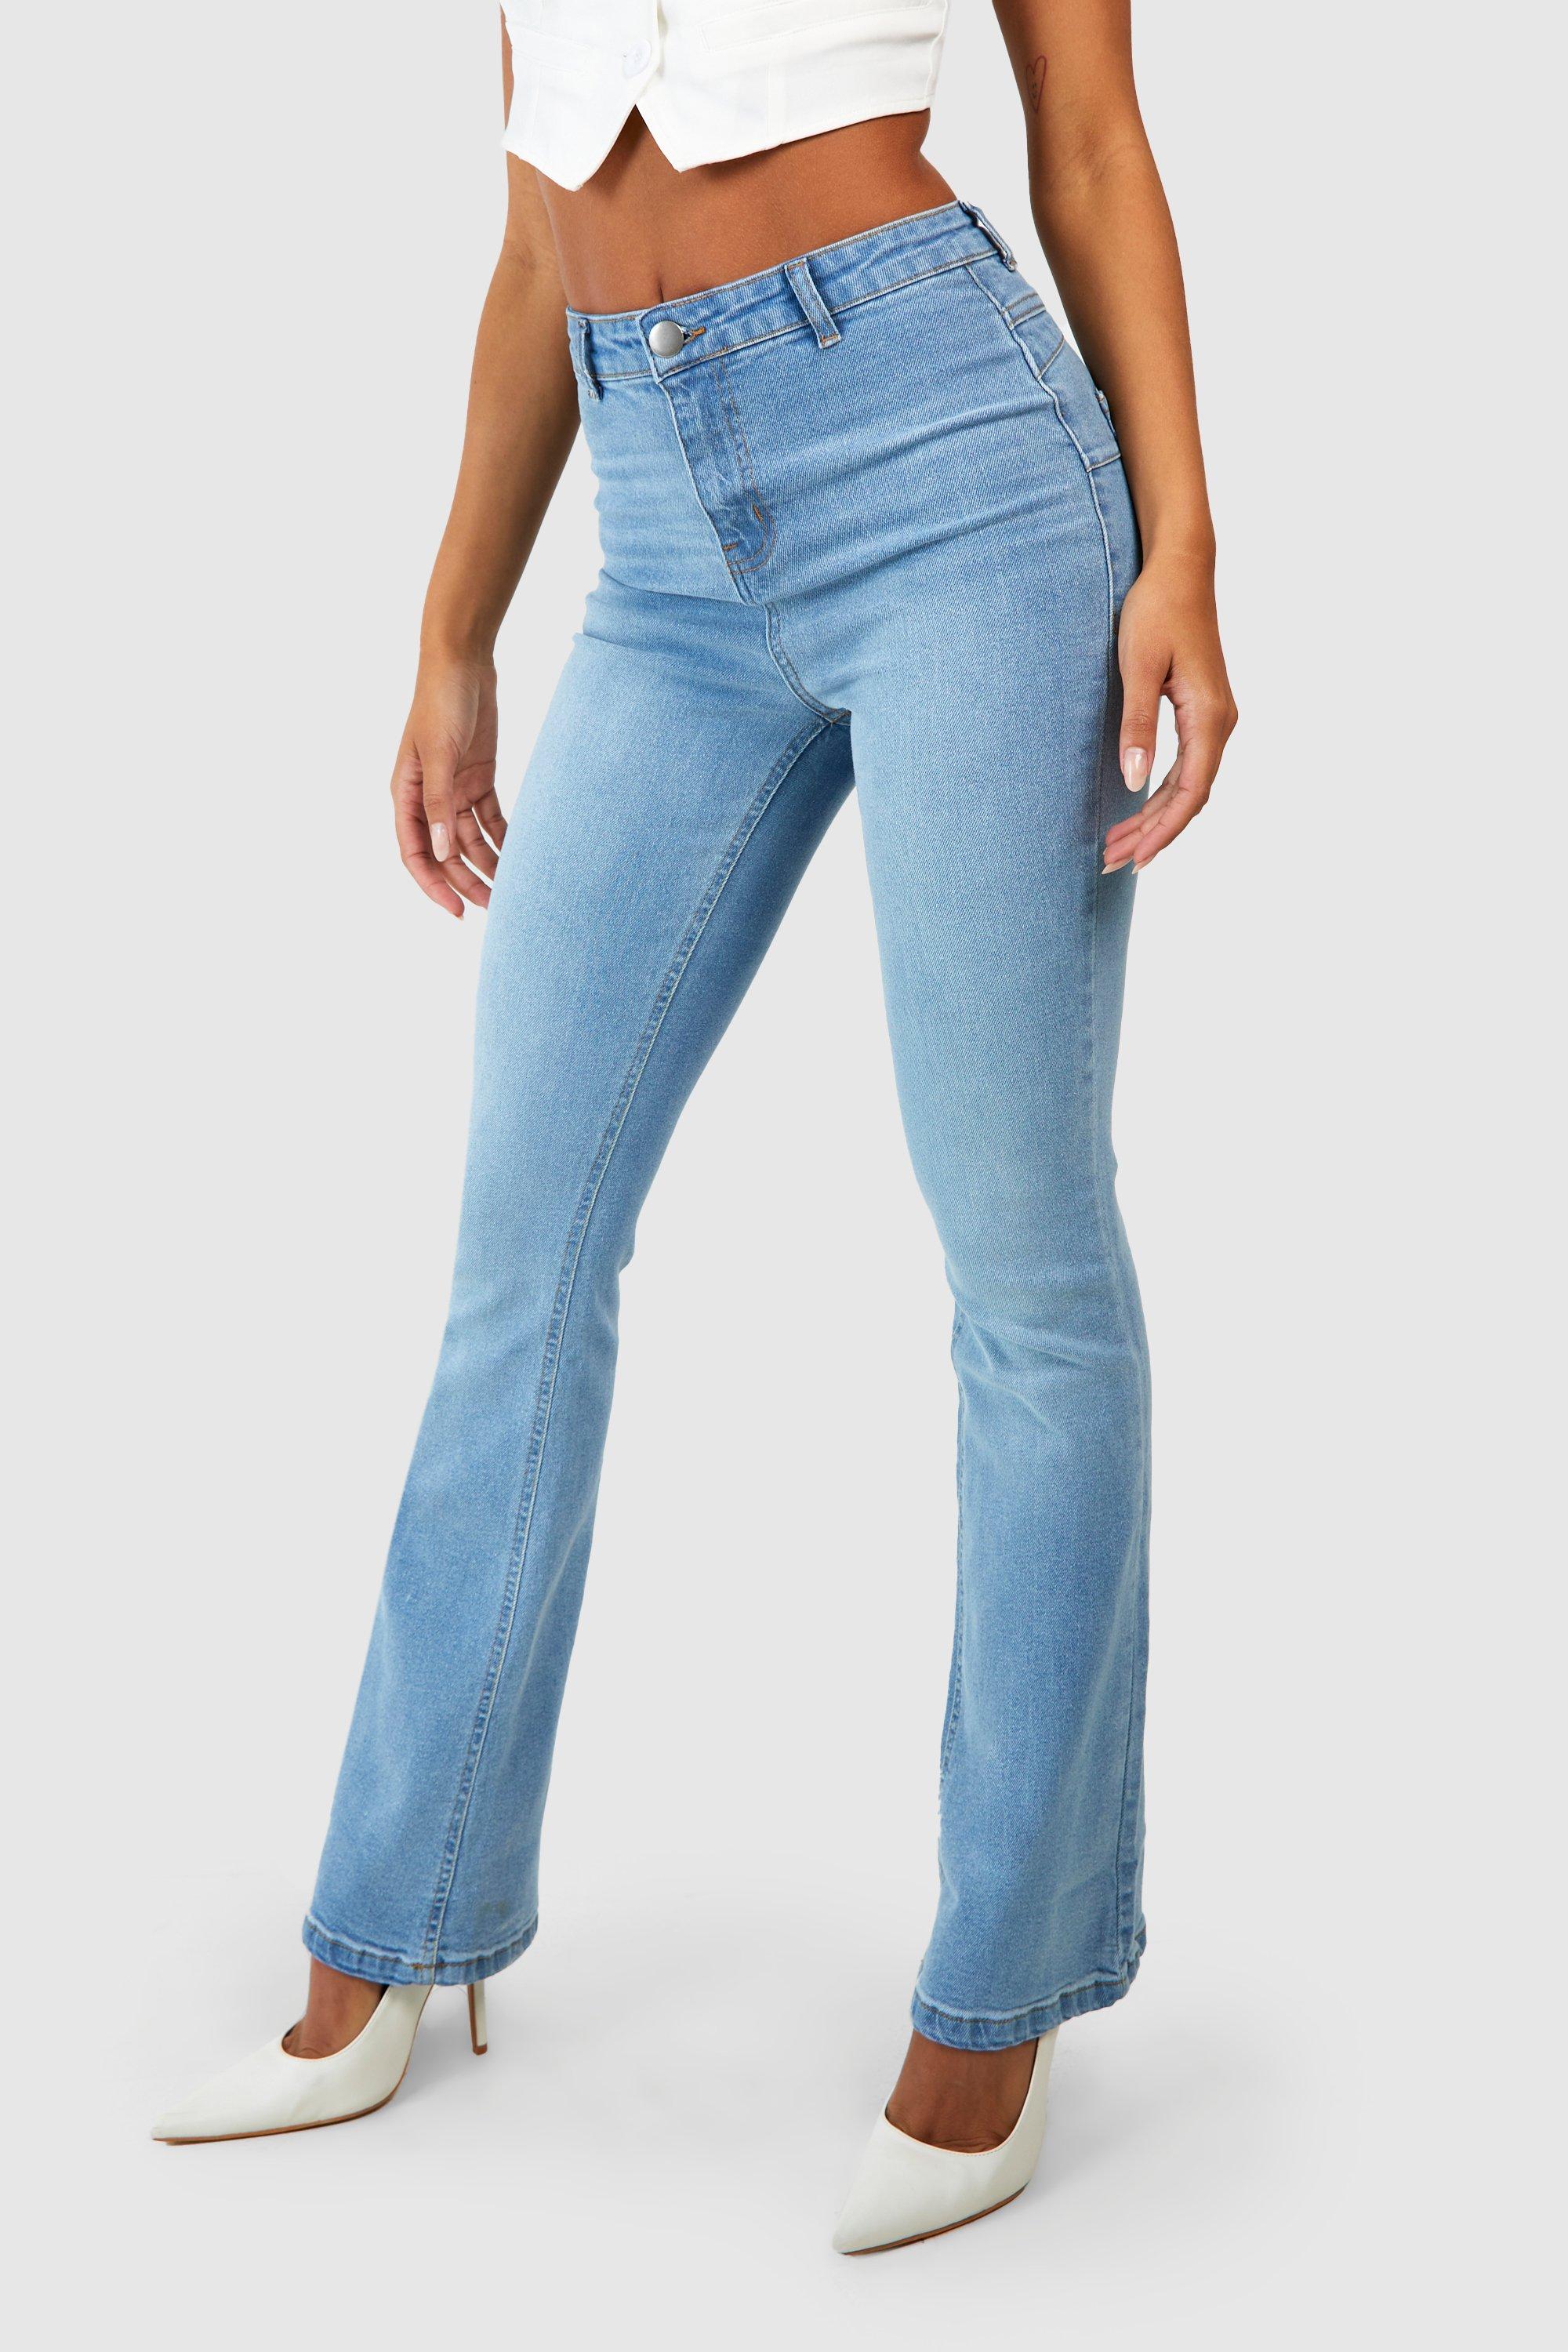 https://media.boohoo.com/i/boohoo/gzz59549_light%20blue_xl_3/female-light%20blue-butt-shaper-high-rise-skinny-flared-jeans